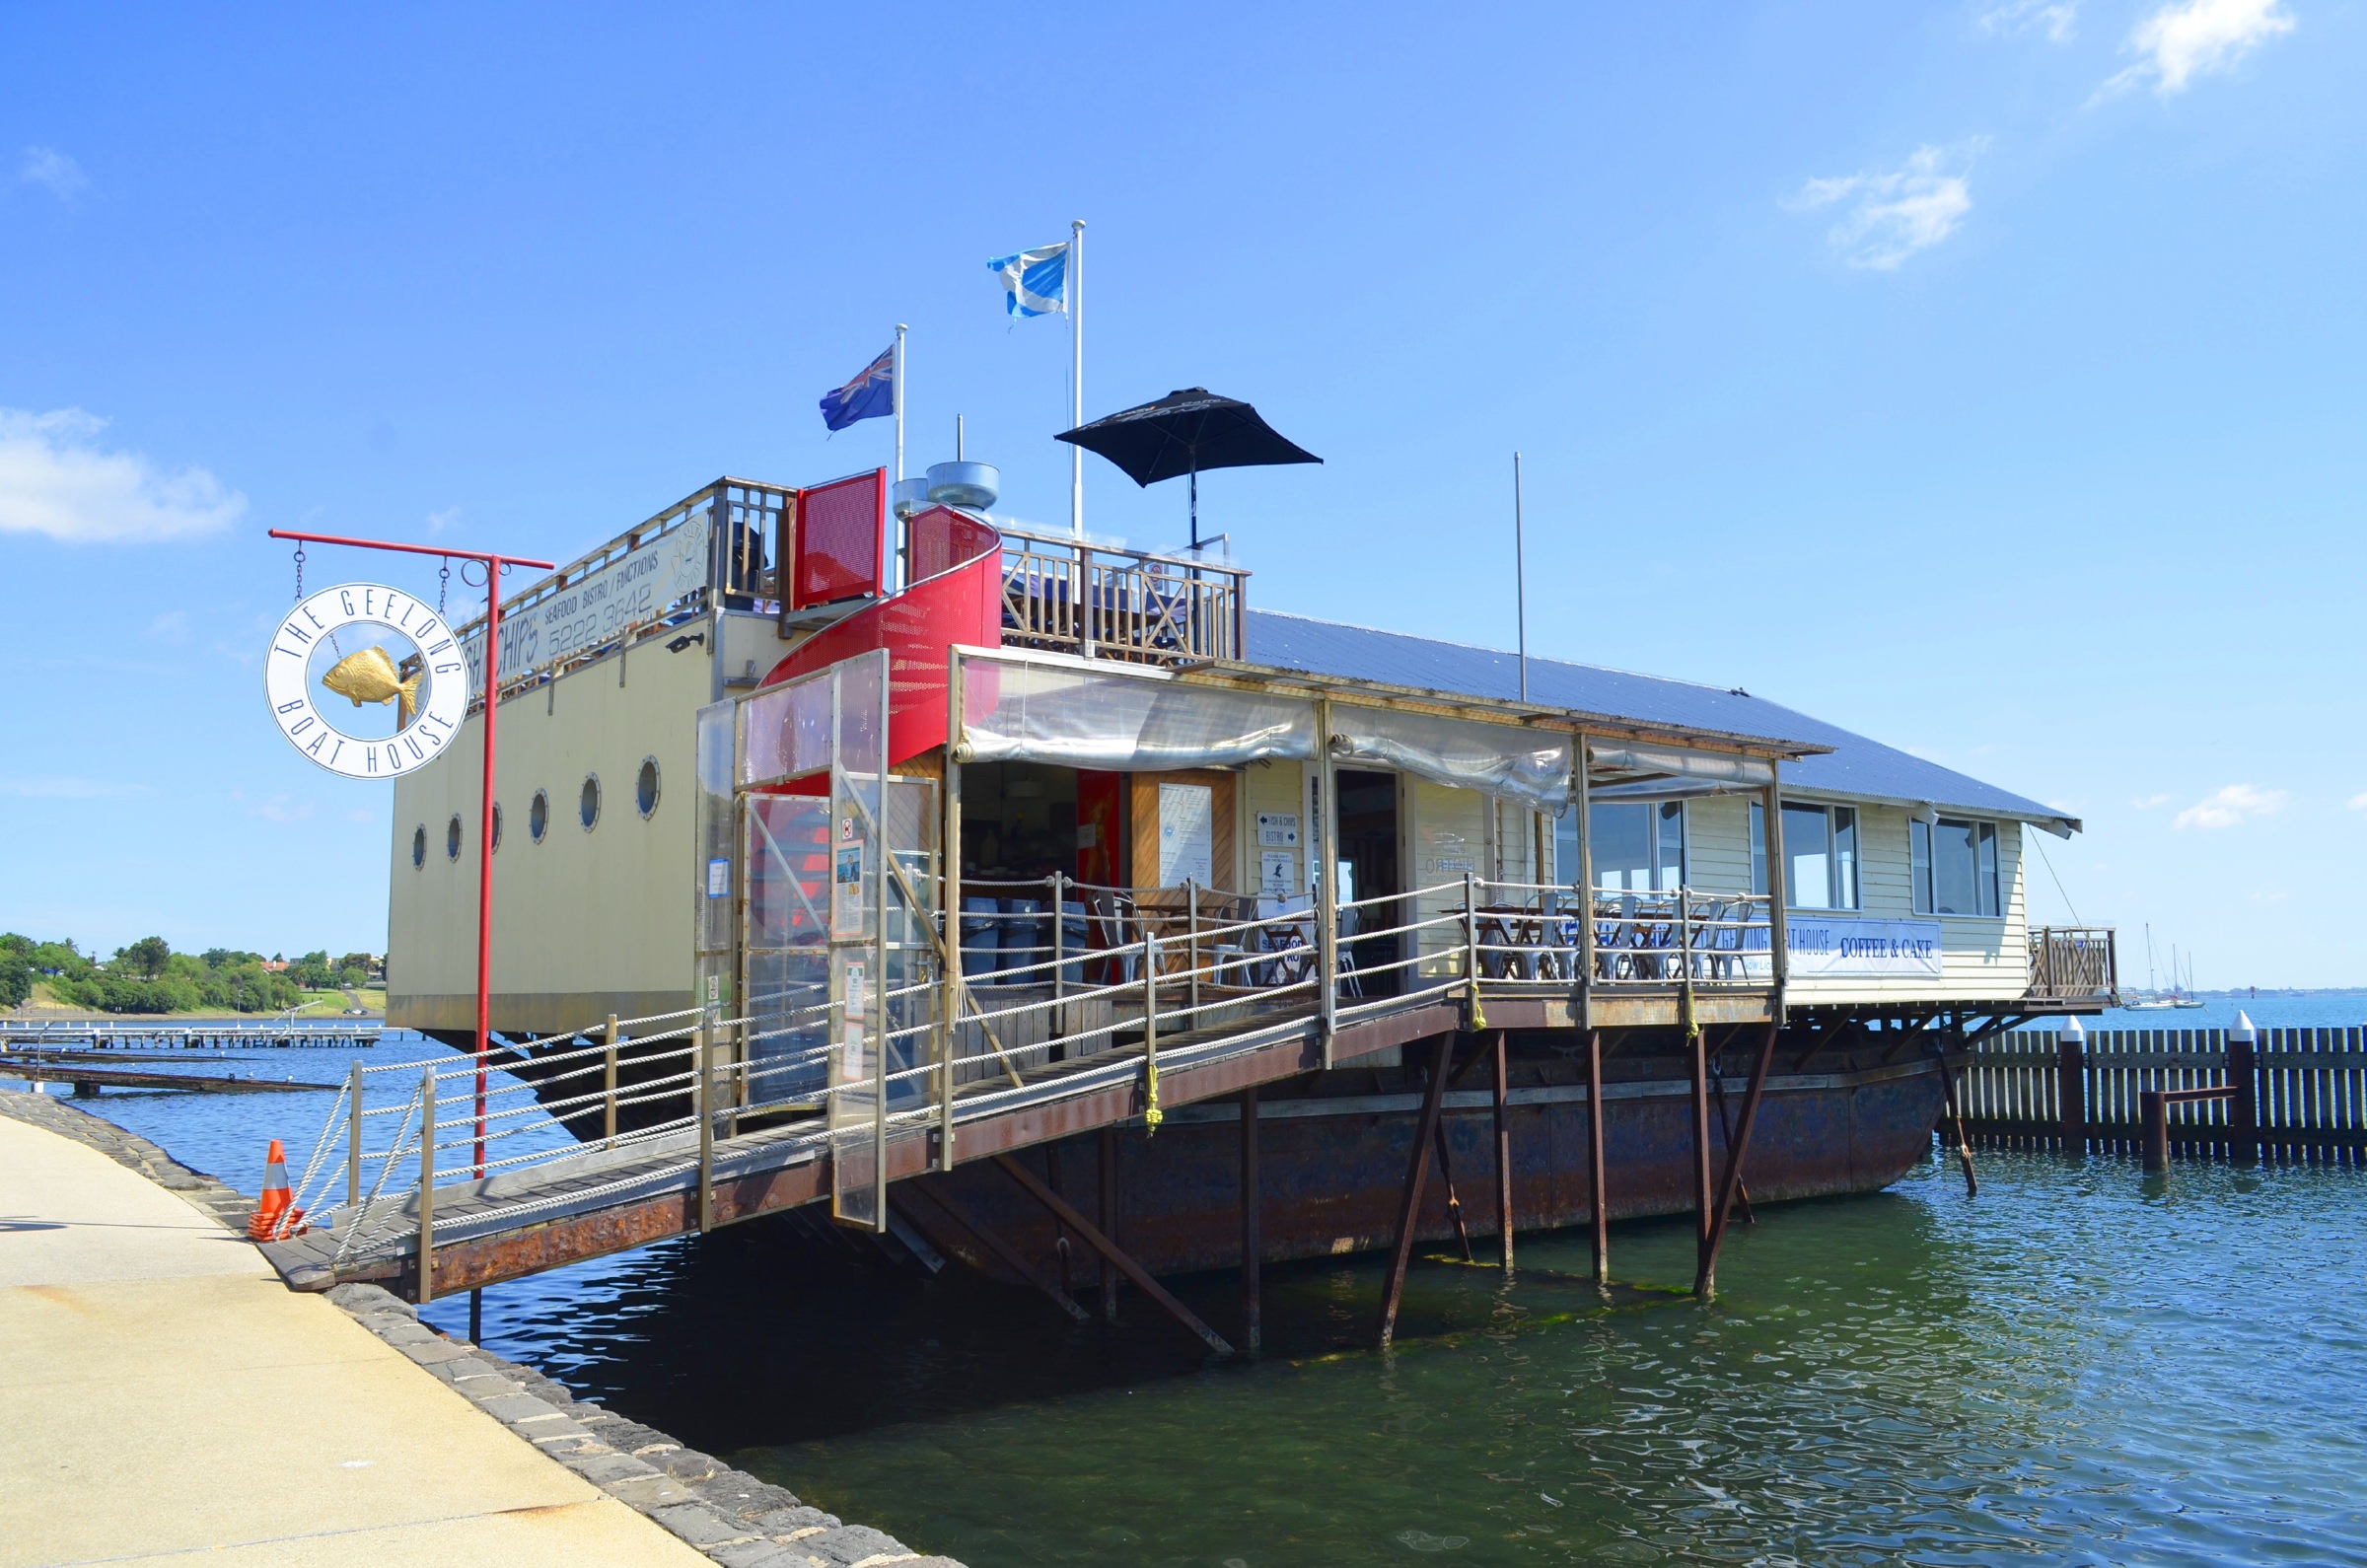 Geelong Boat House  Geelong, Australia Restaurants  Lonely Planet